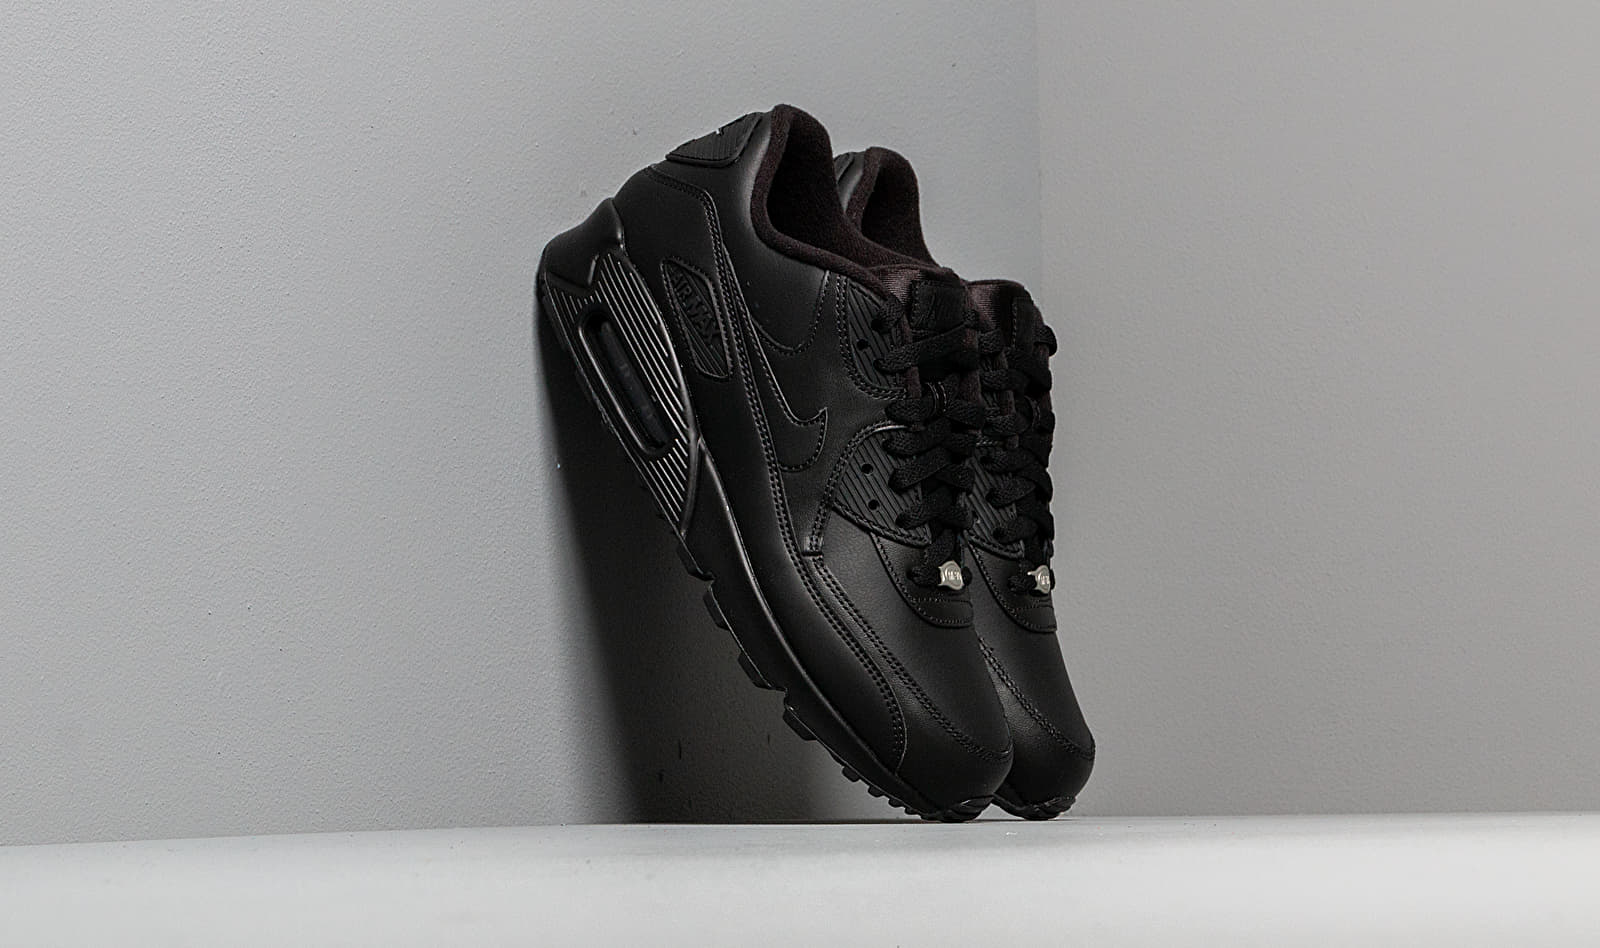 Nike Air Max 90 Leather Black/ Black